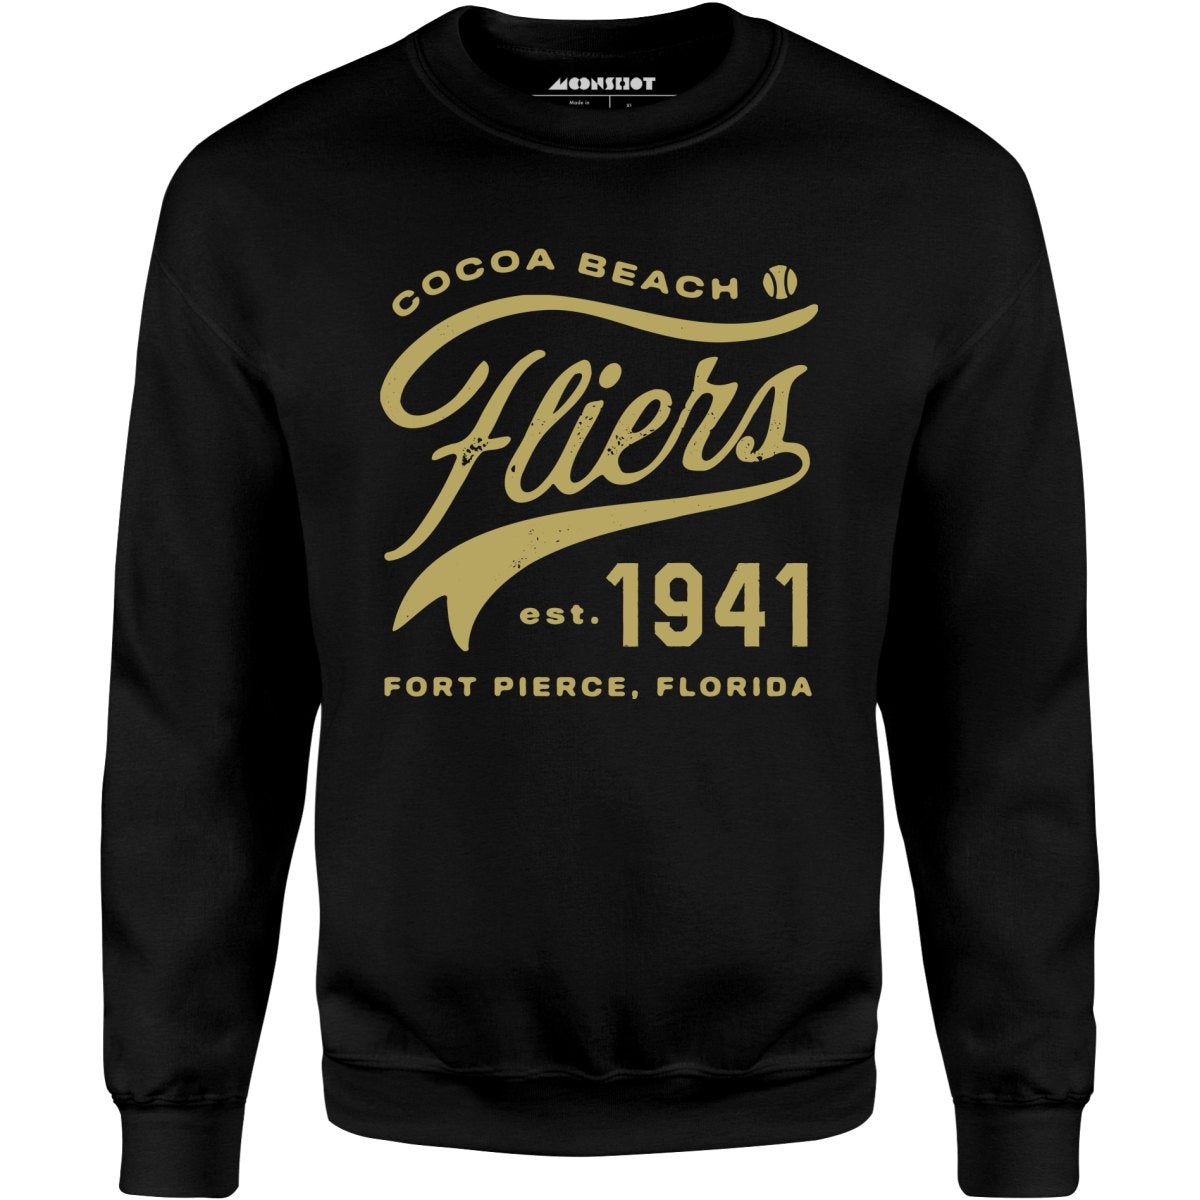 Cocoa Beach Fliers - Florida - Vintage Defunct Baseball Teams - Unisex Sweatshirt